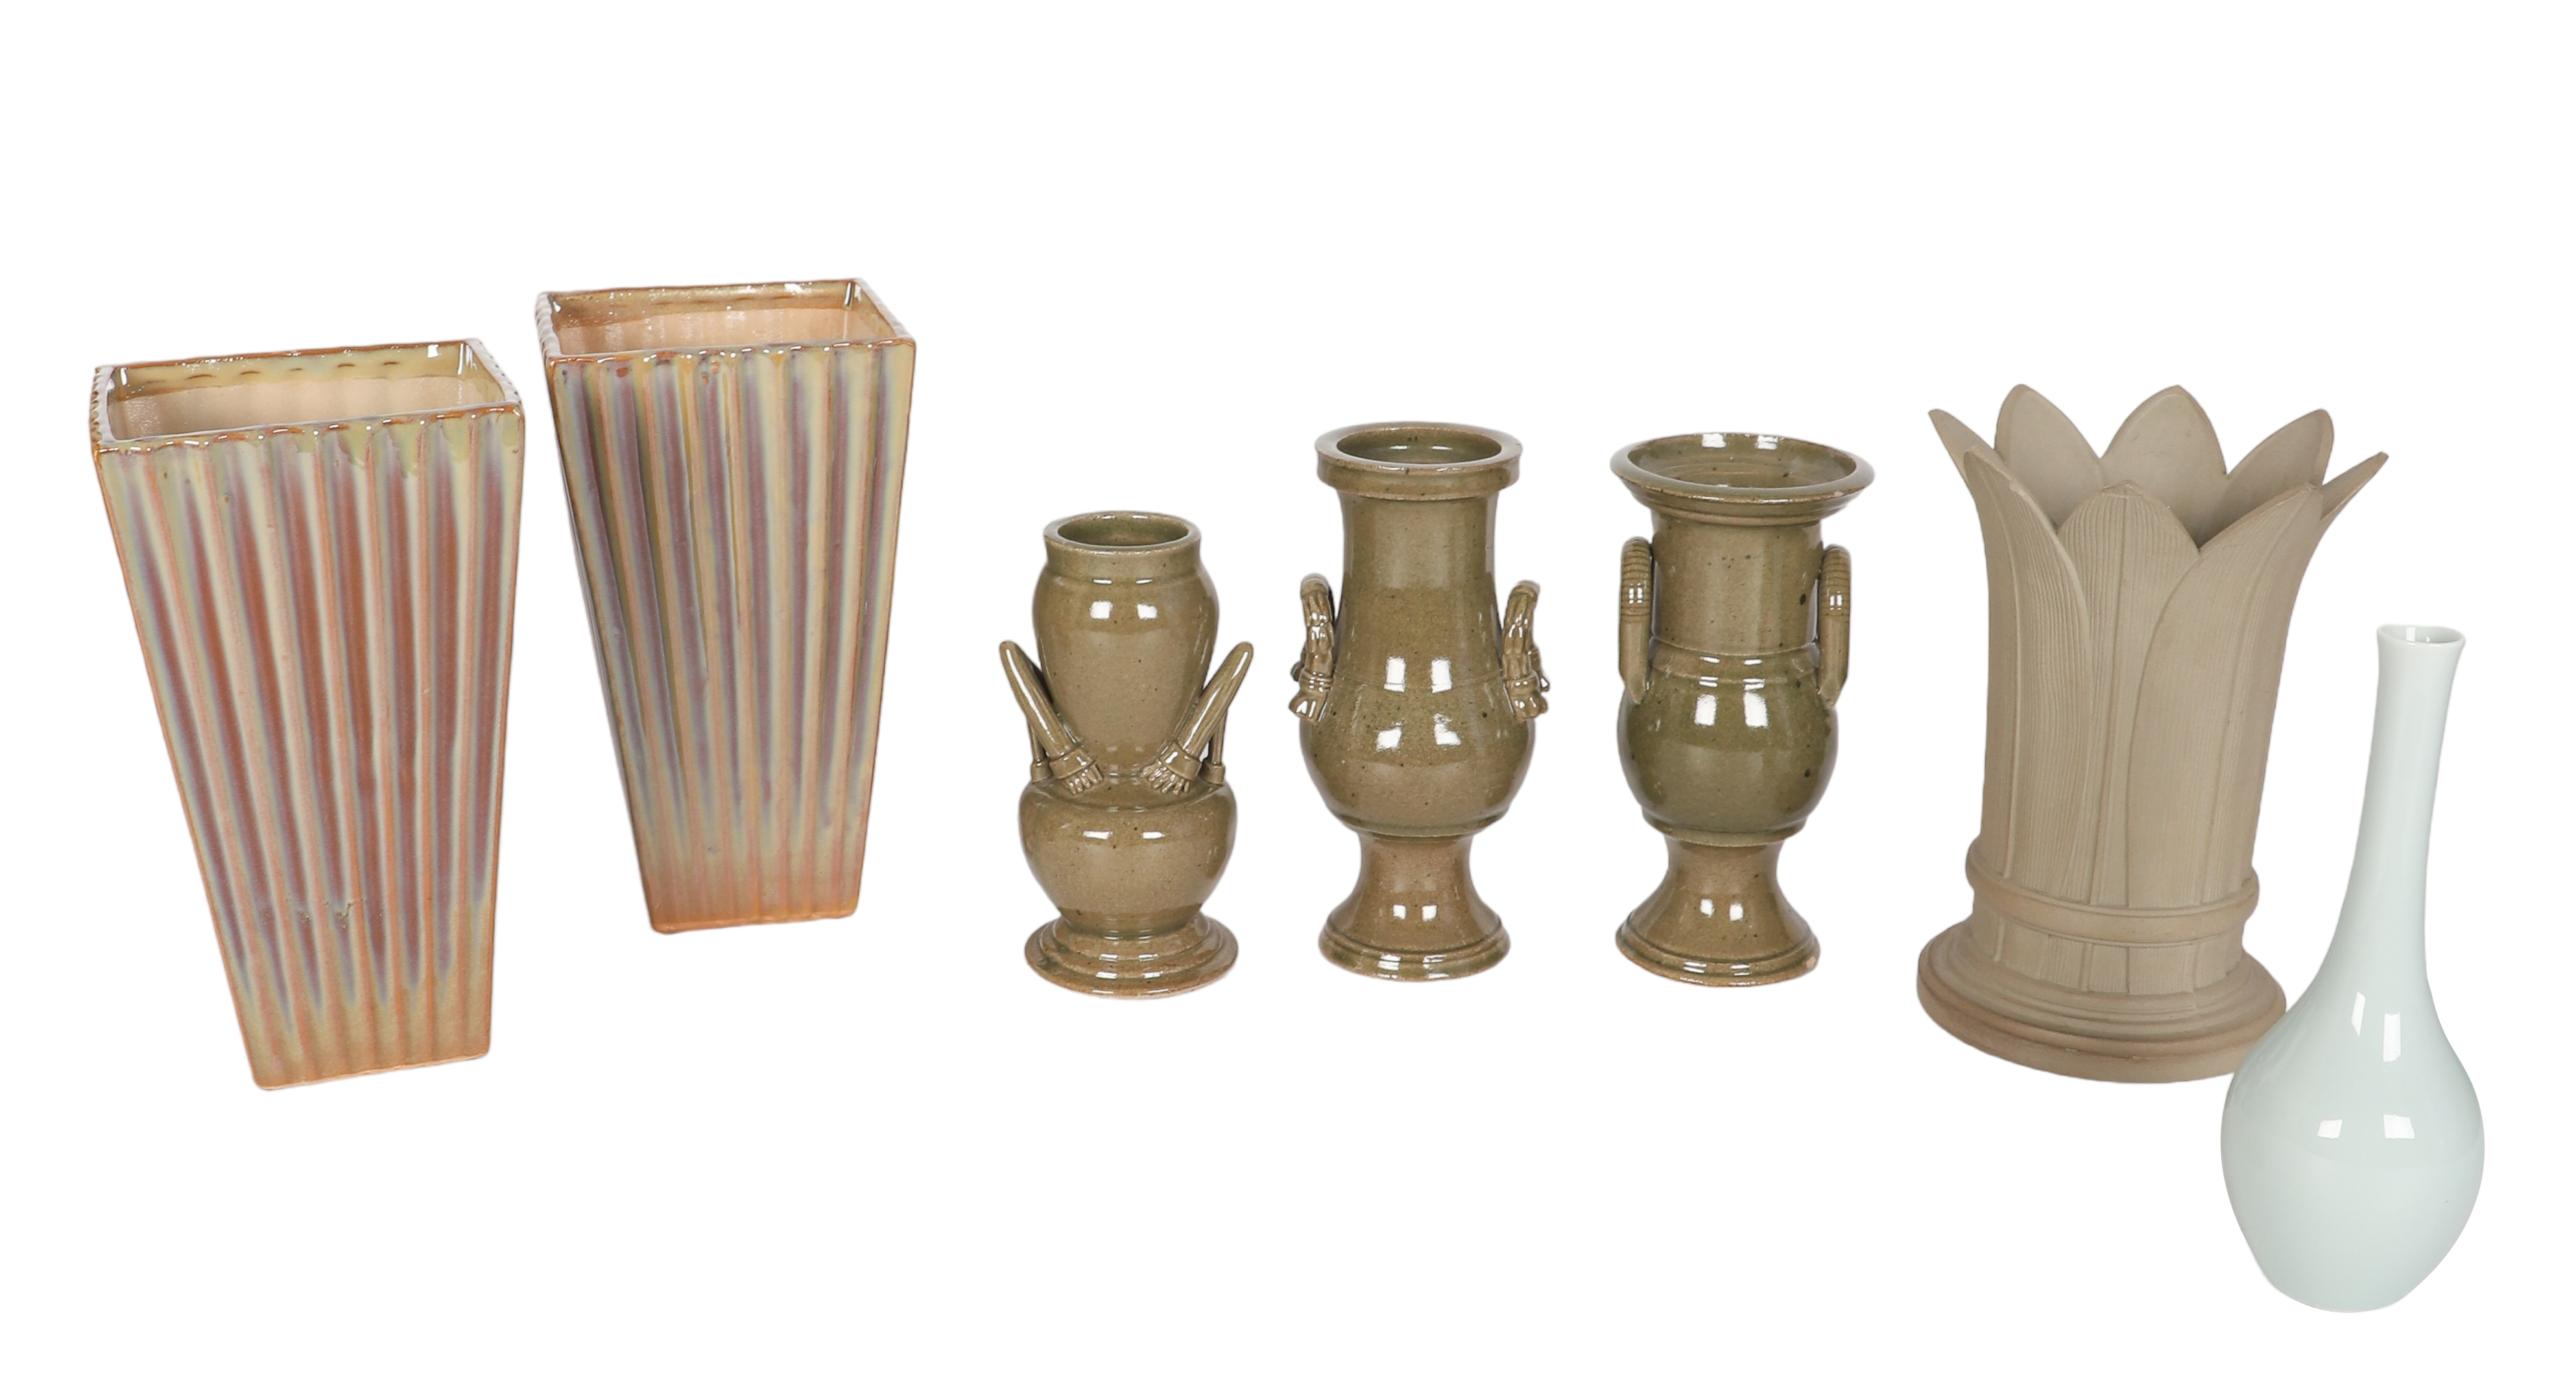  7 Asian porcelain pottery vases  3b3c57